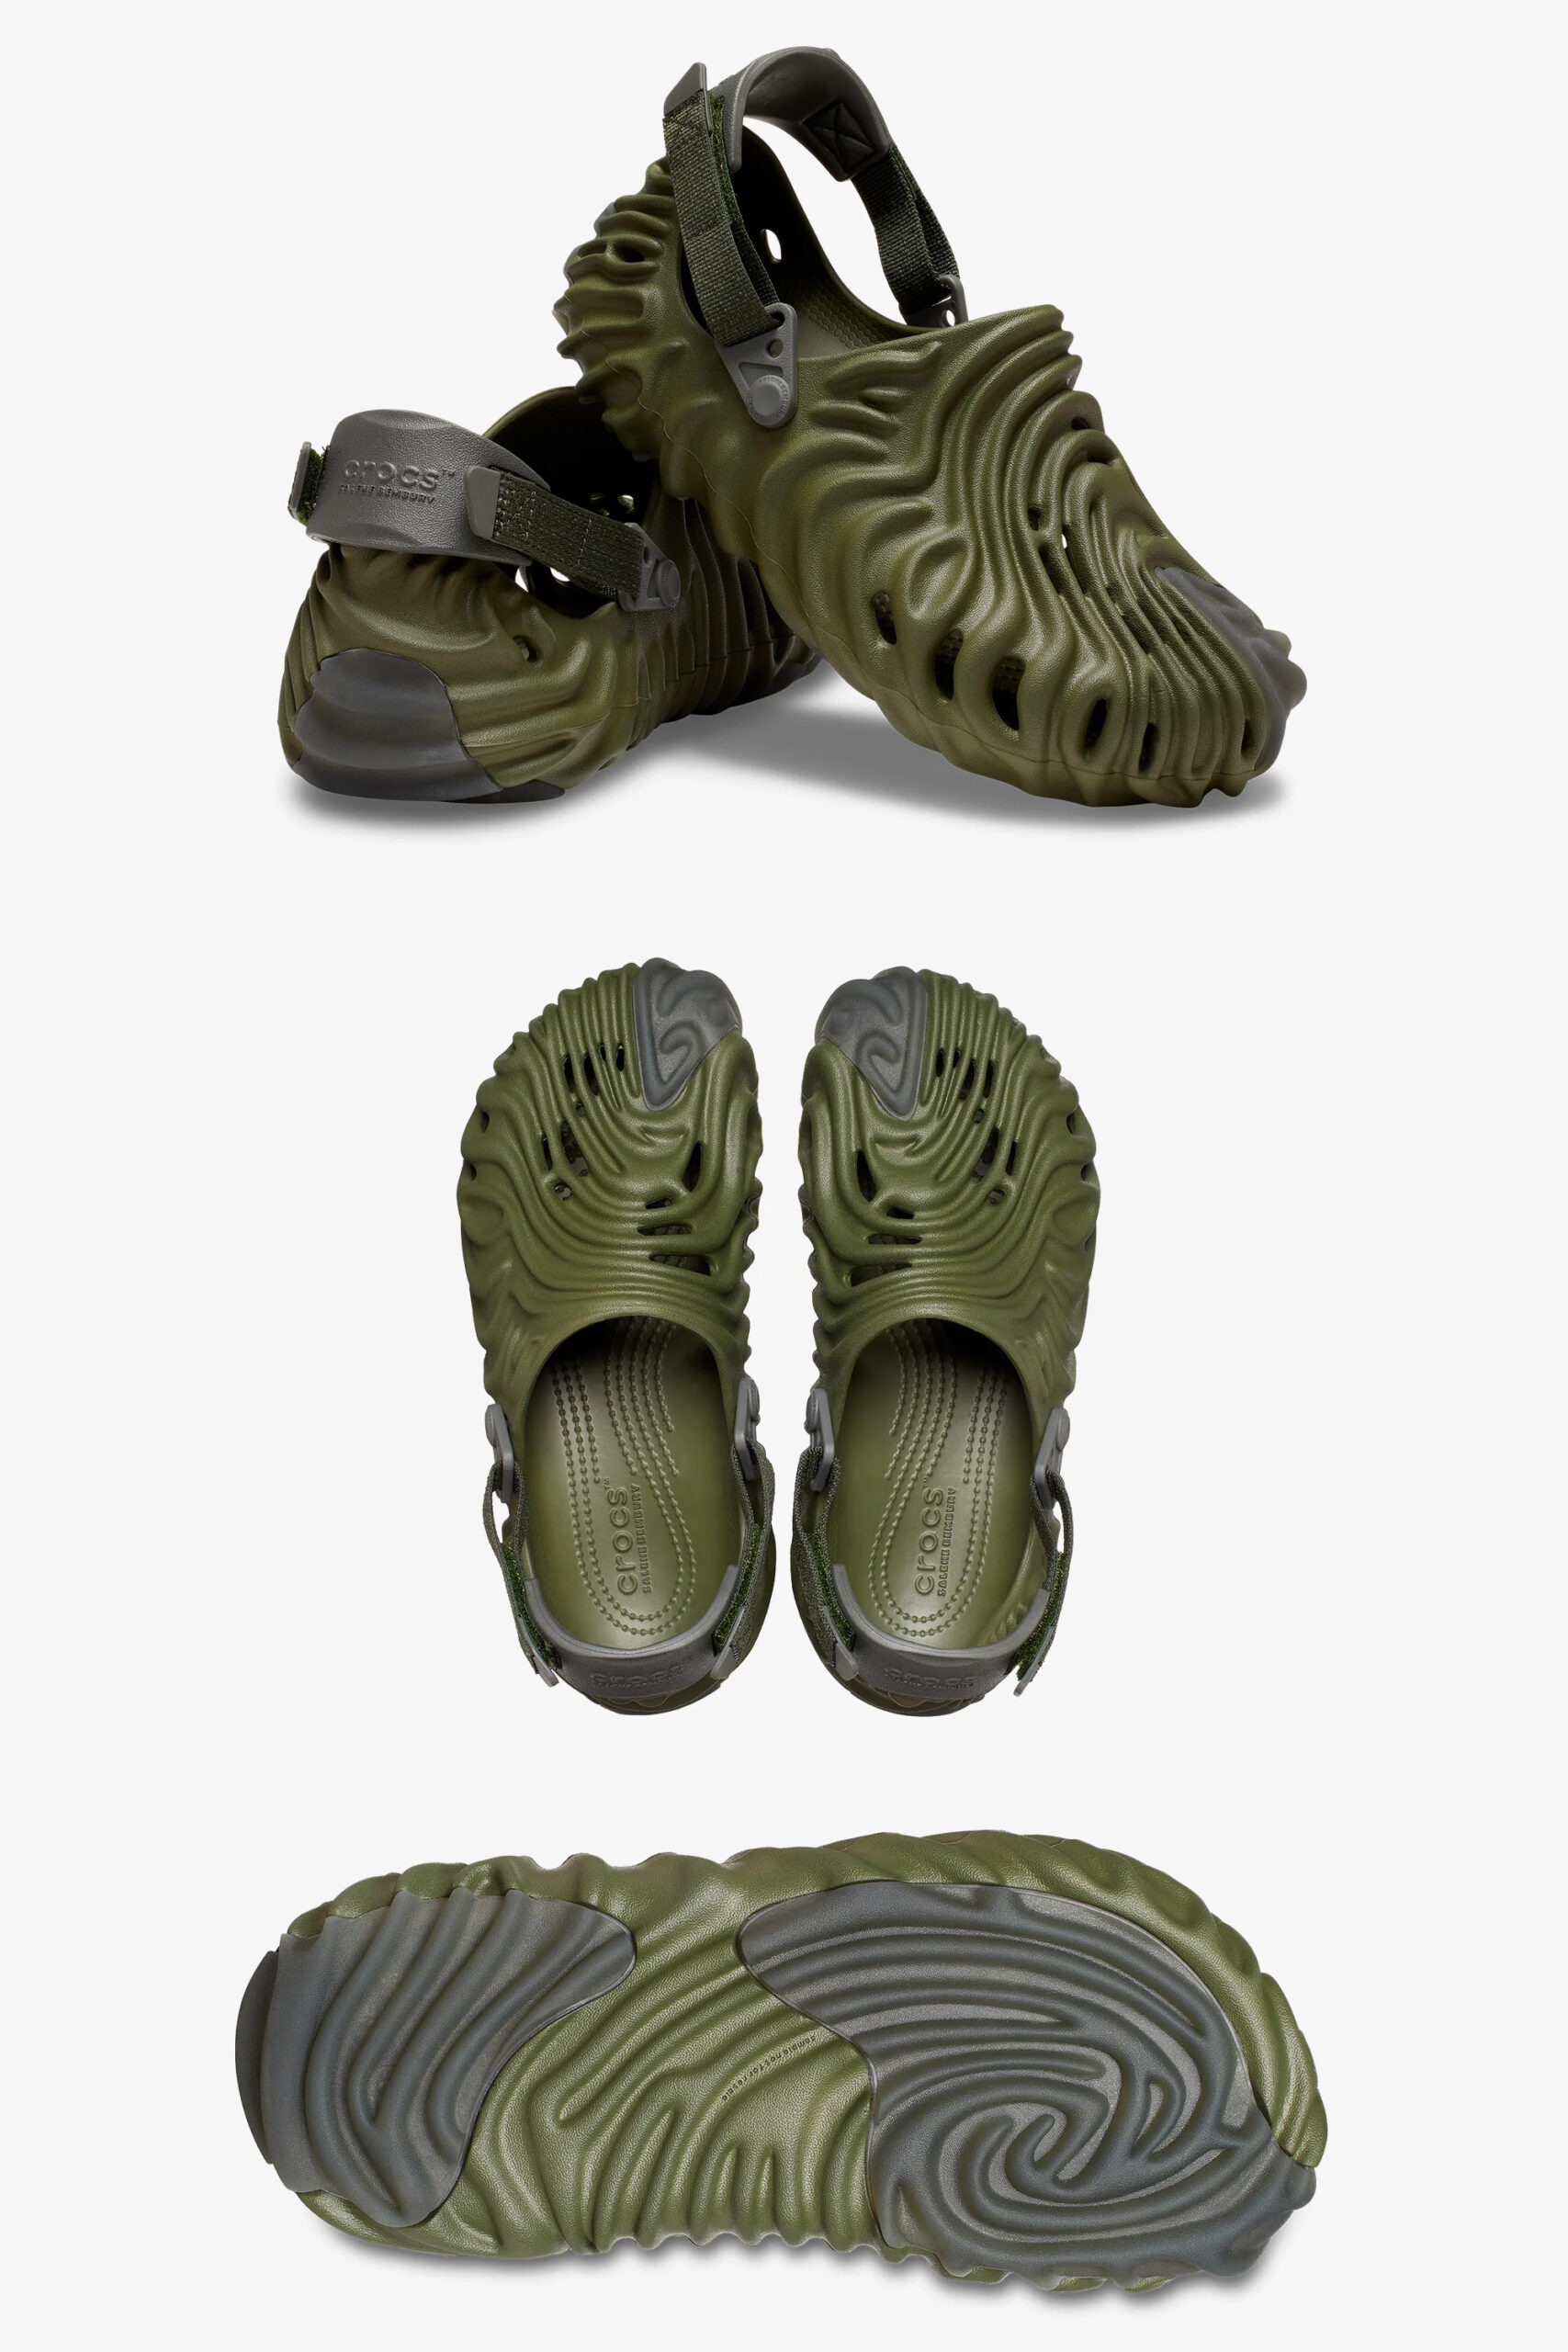 Salehe Bembury x Crocs Pollex Clog – Cucumber | sneakerb0b RELEASES